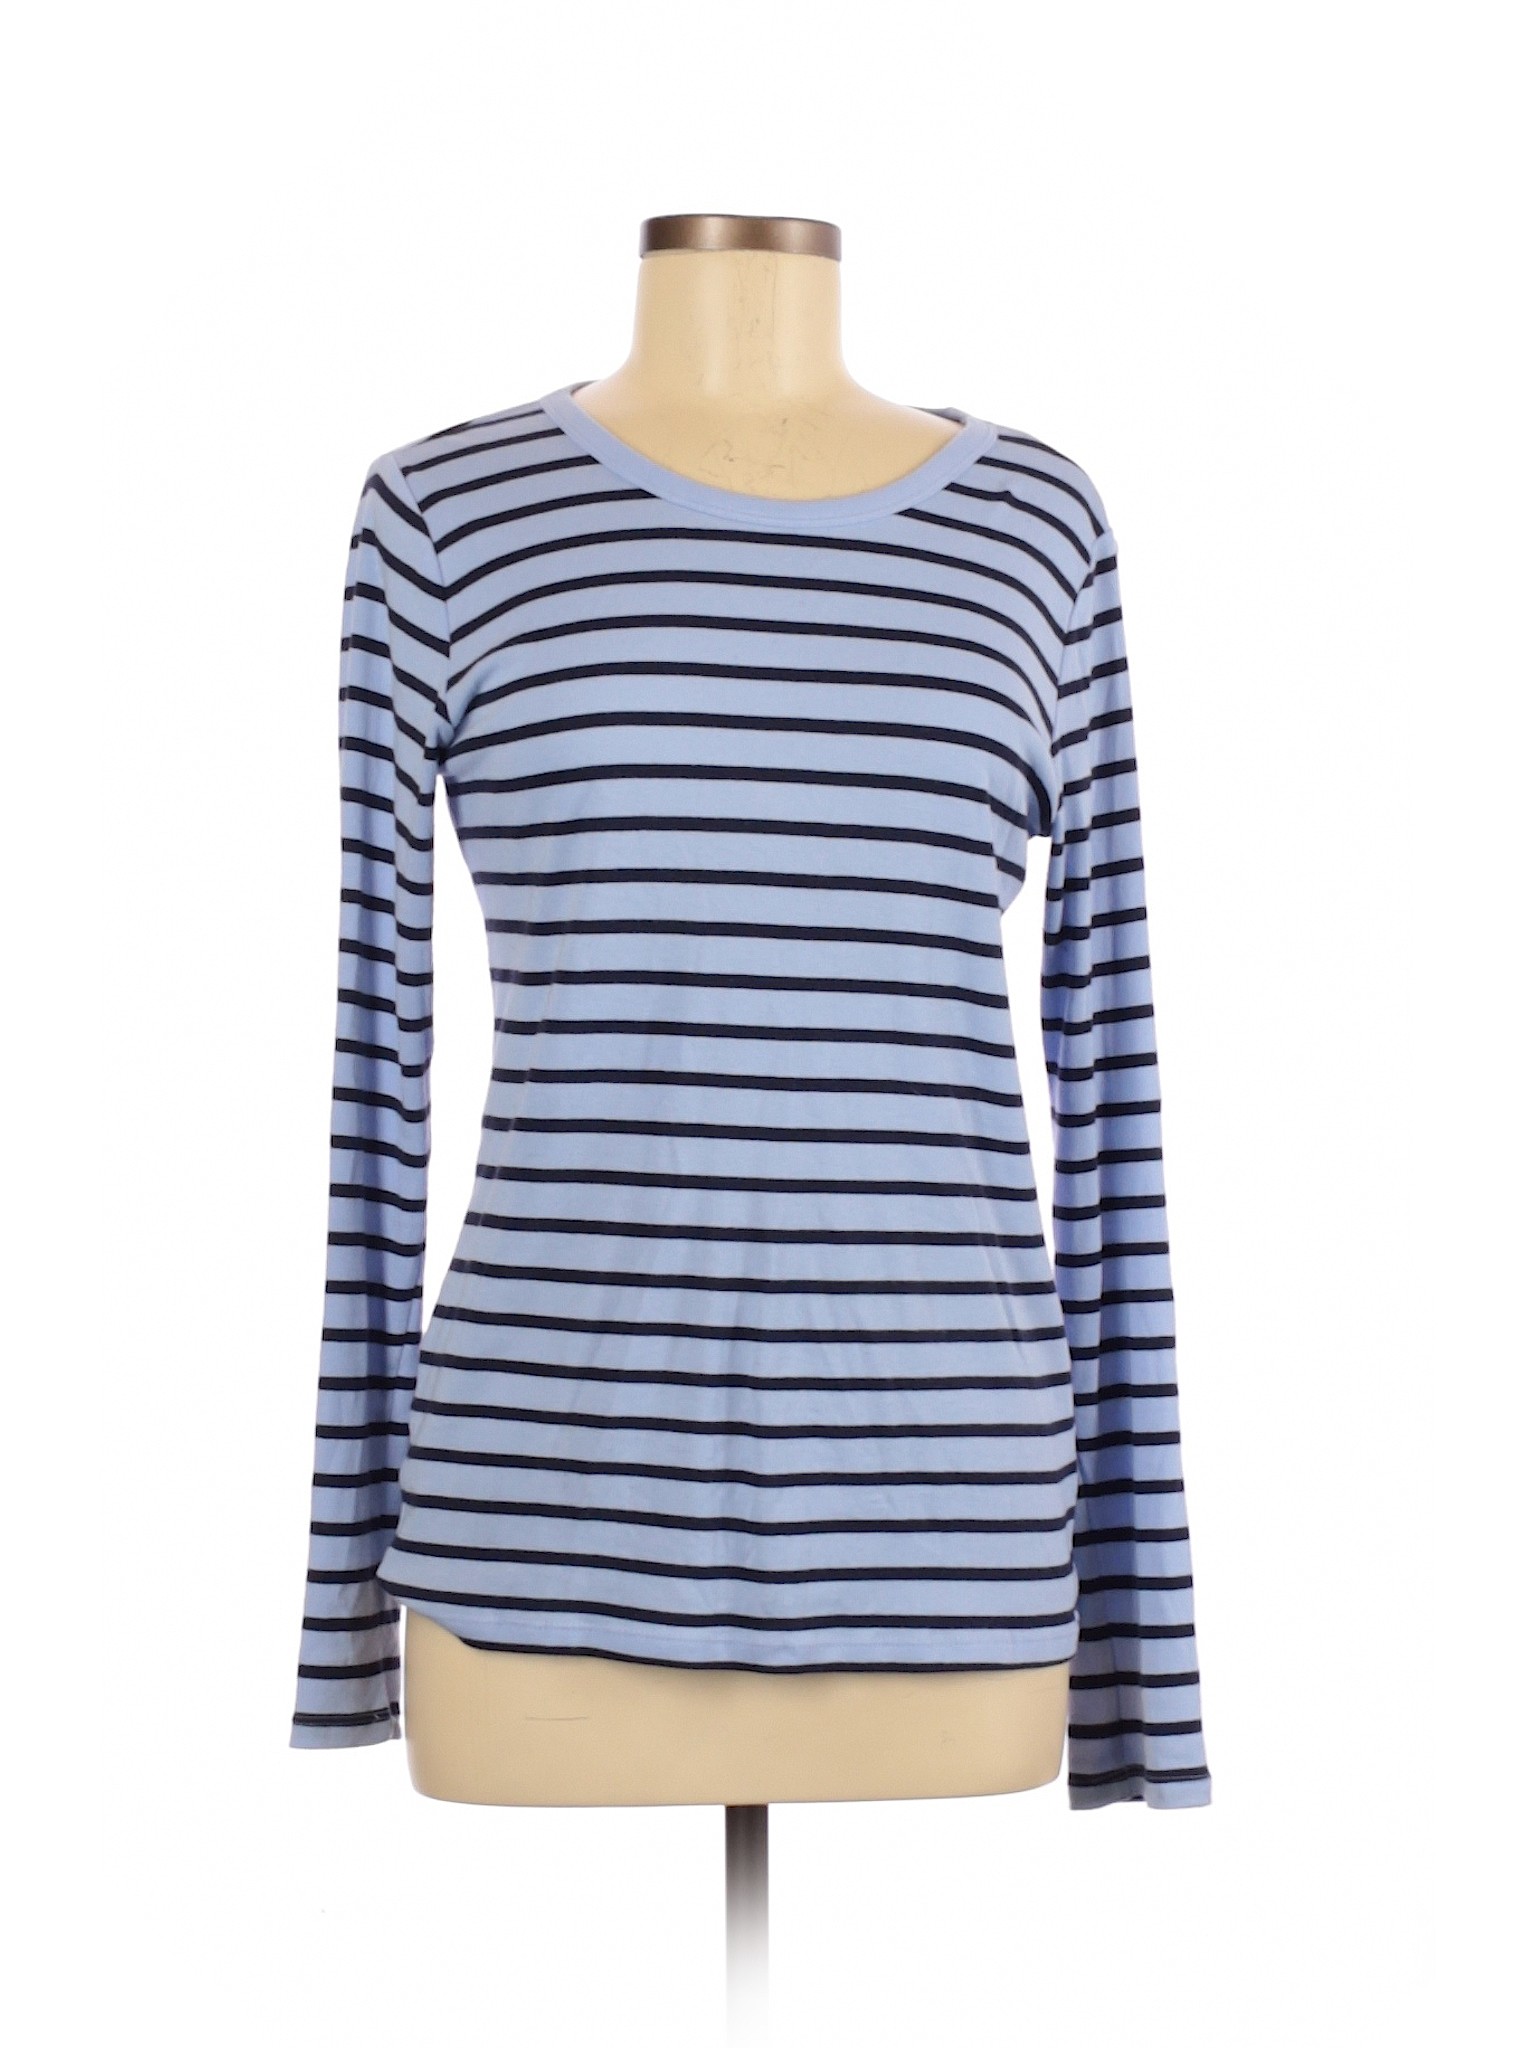 Gap Women Blue Long Sleeve T-Shirt M | eBay